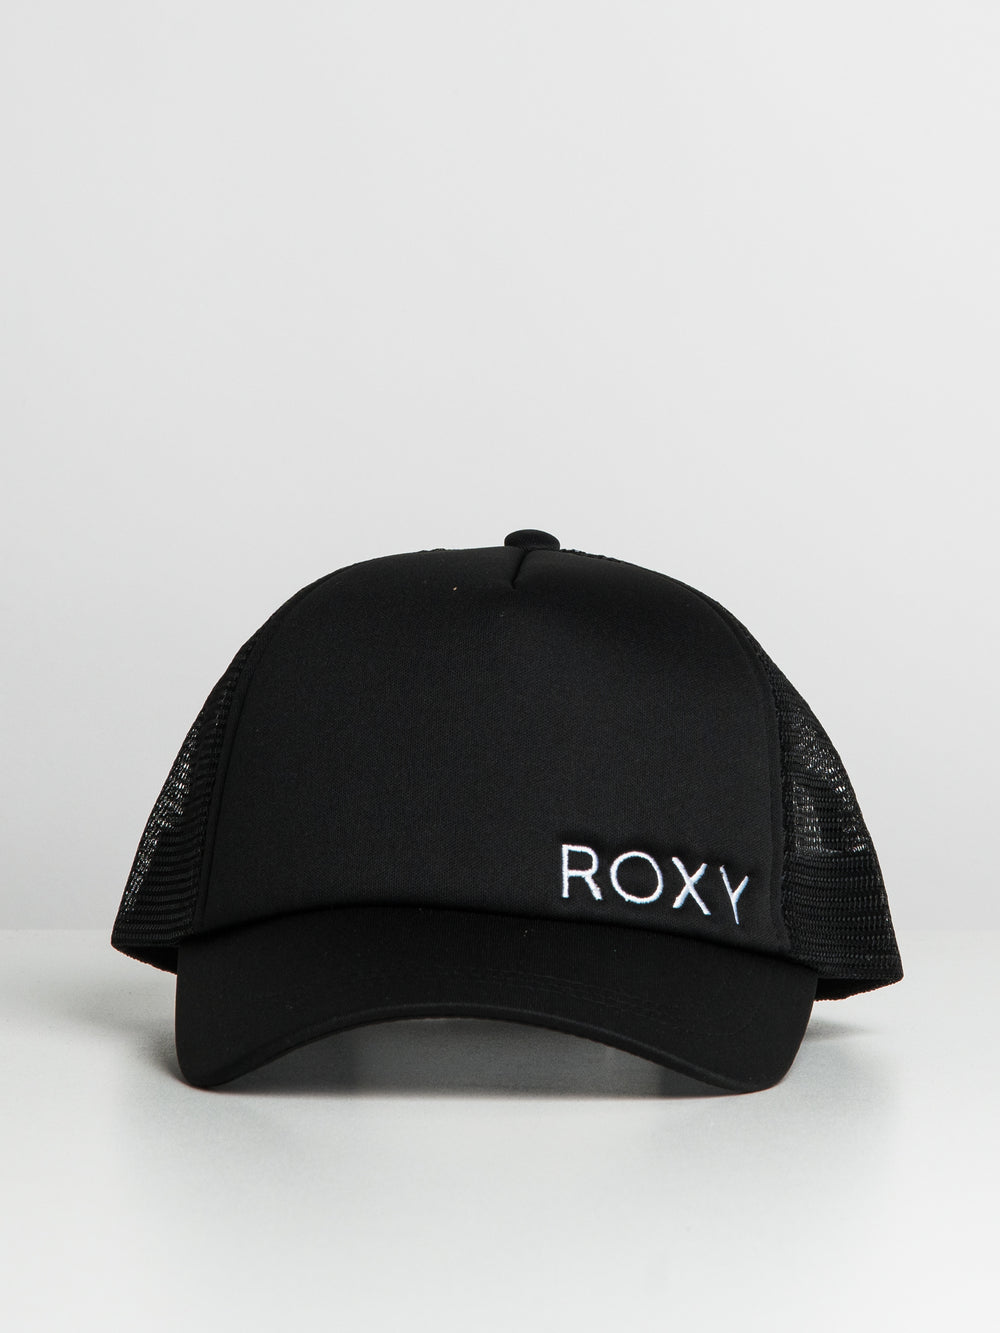 ROXY FINISHLINE 2 HAT - CLEARANCE